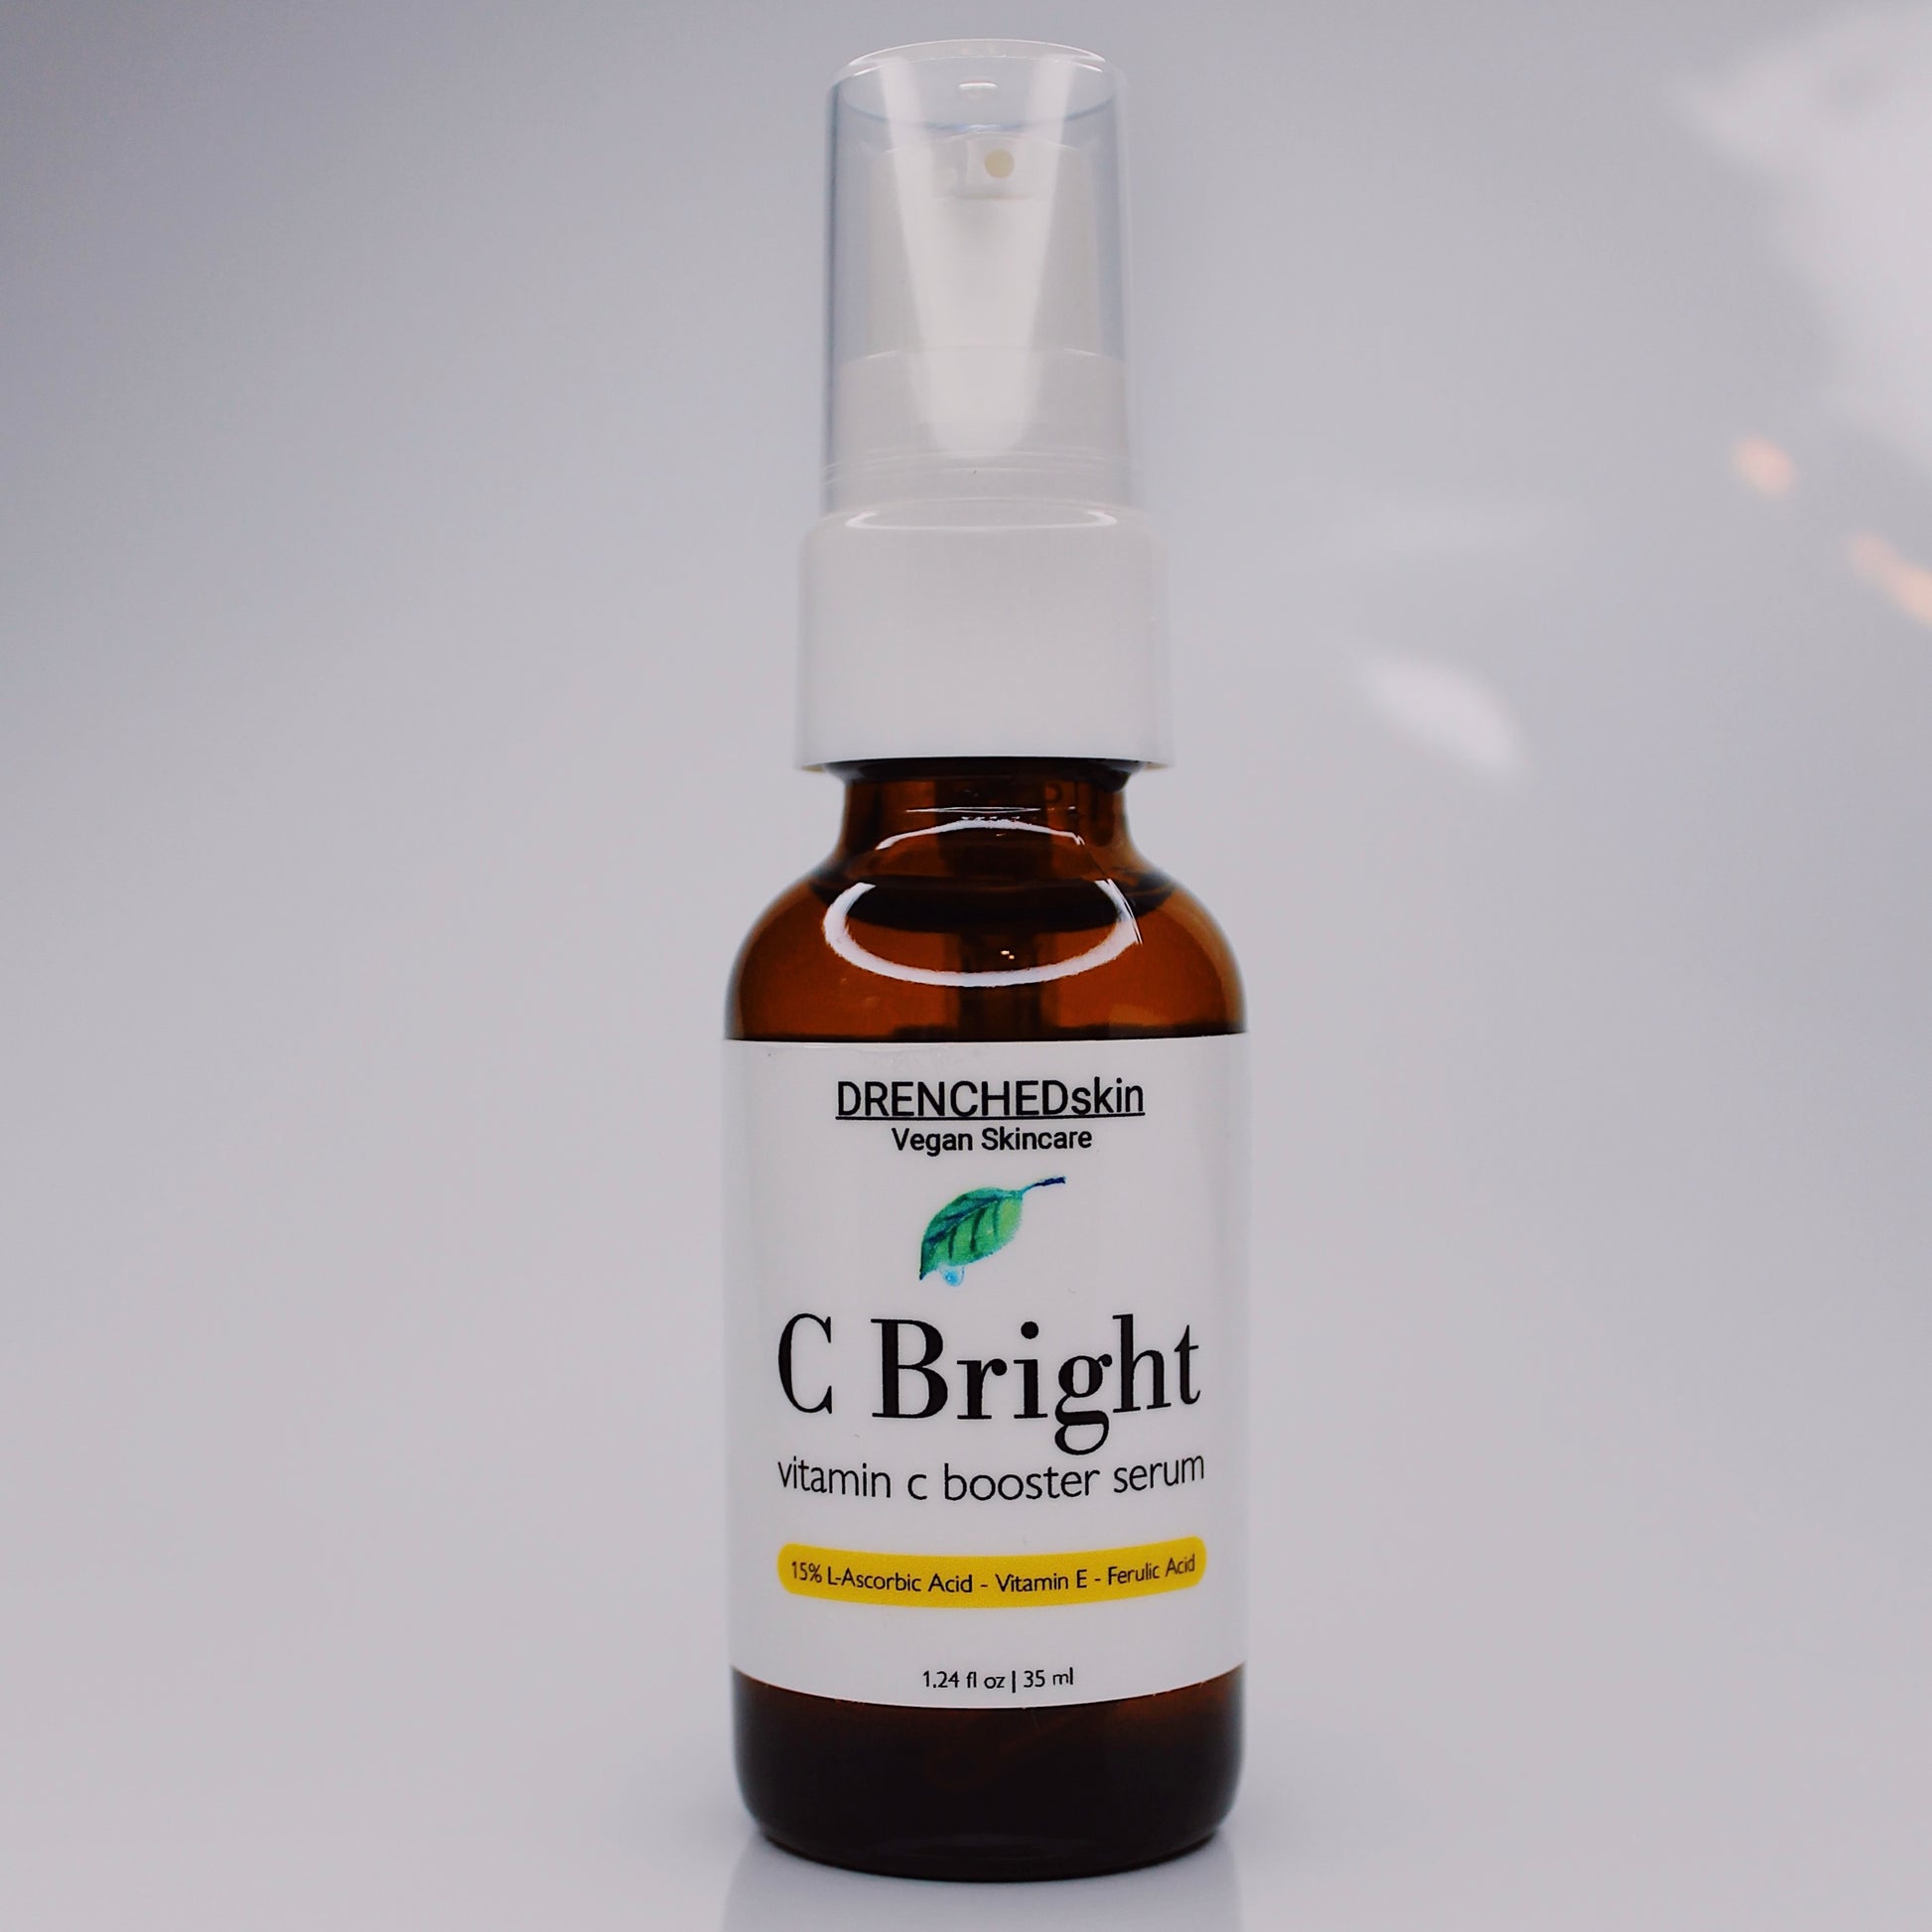 C BRIGHT Vitamin C Booster Serum - DRENCHEDskin®